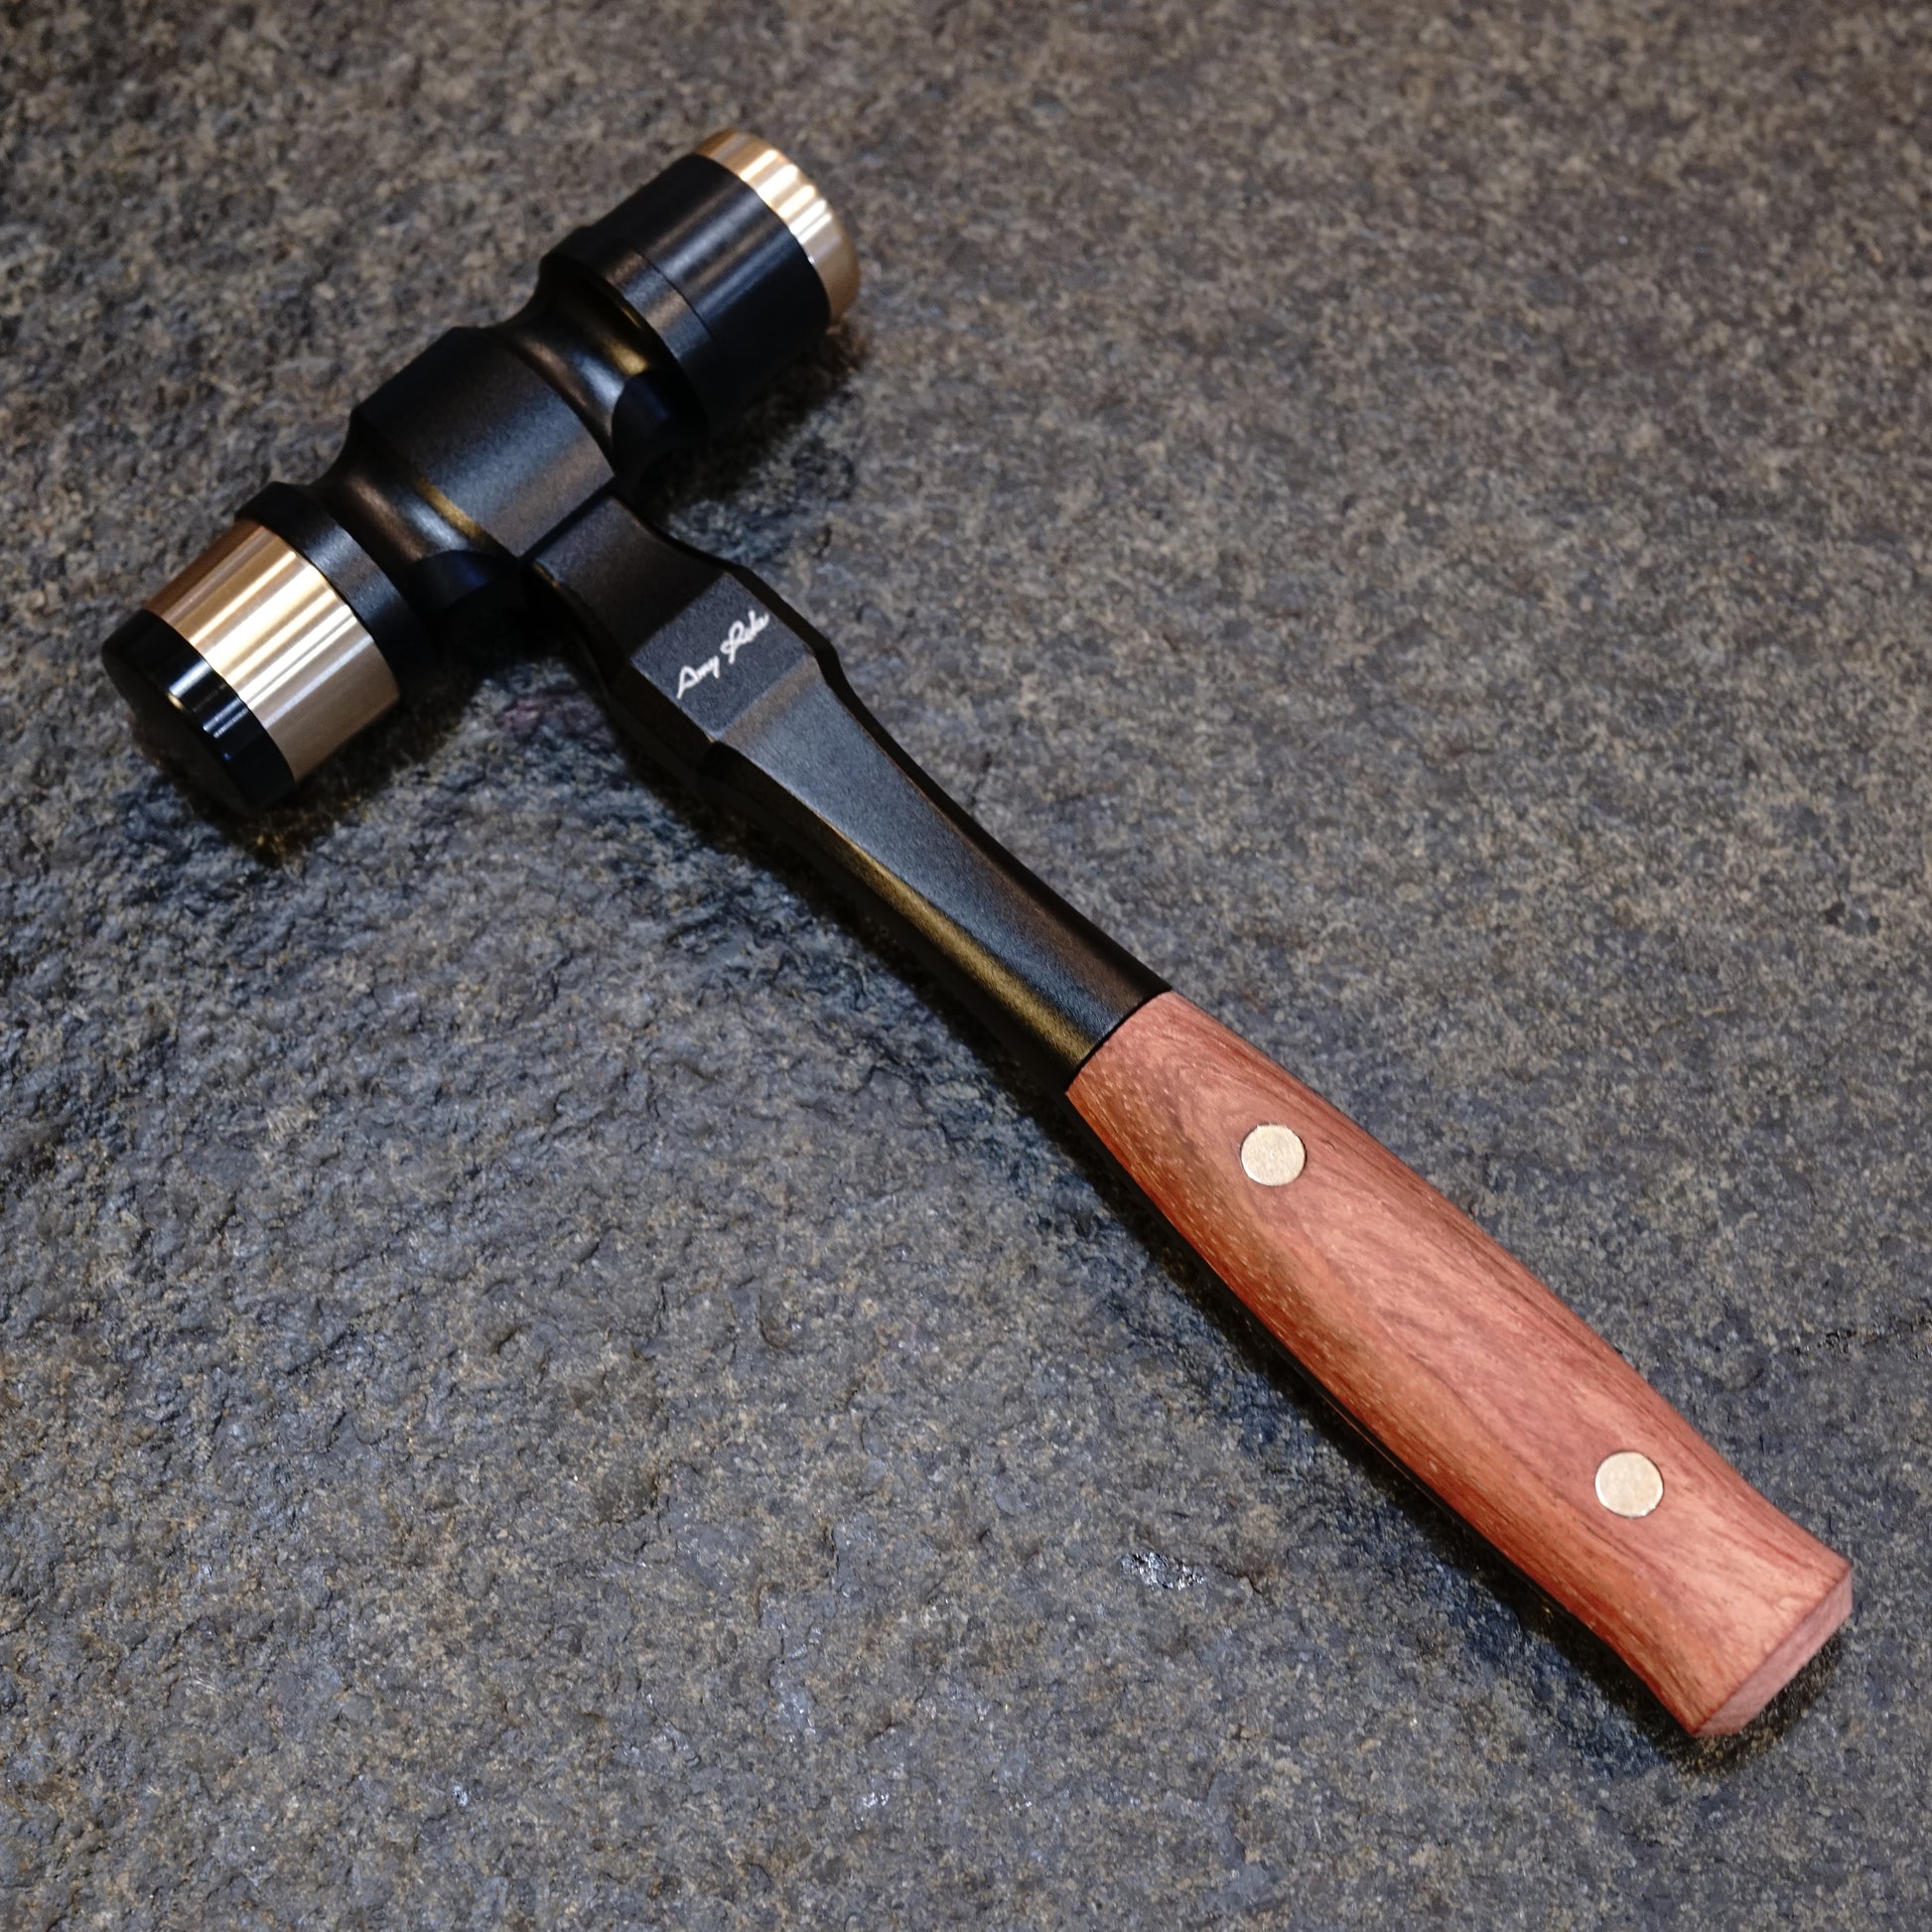 Leather work hammer/mallet